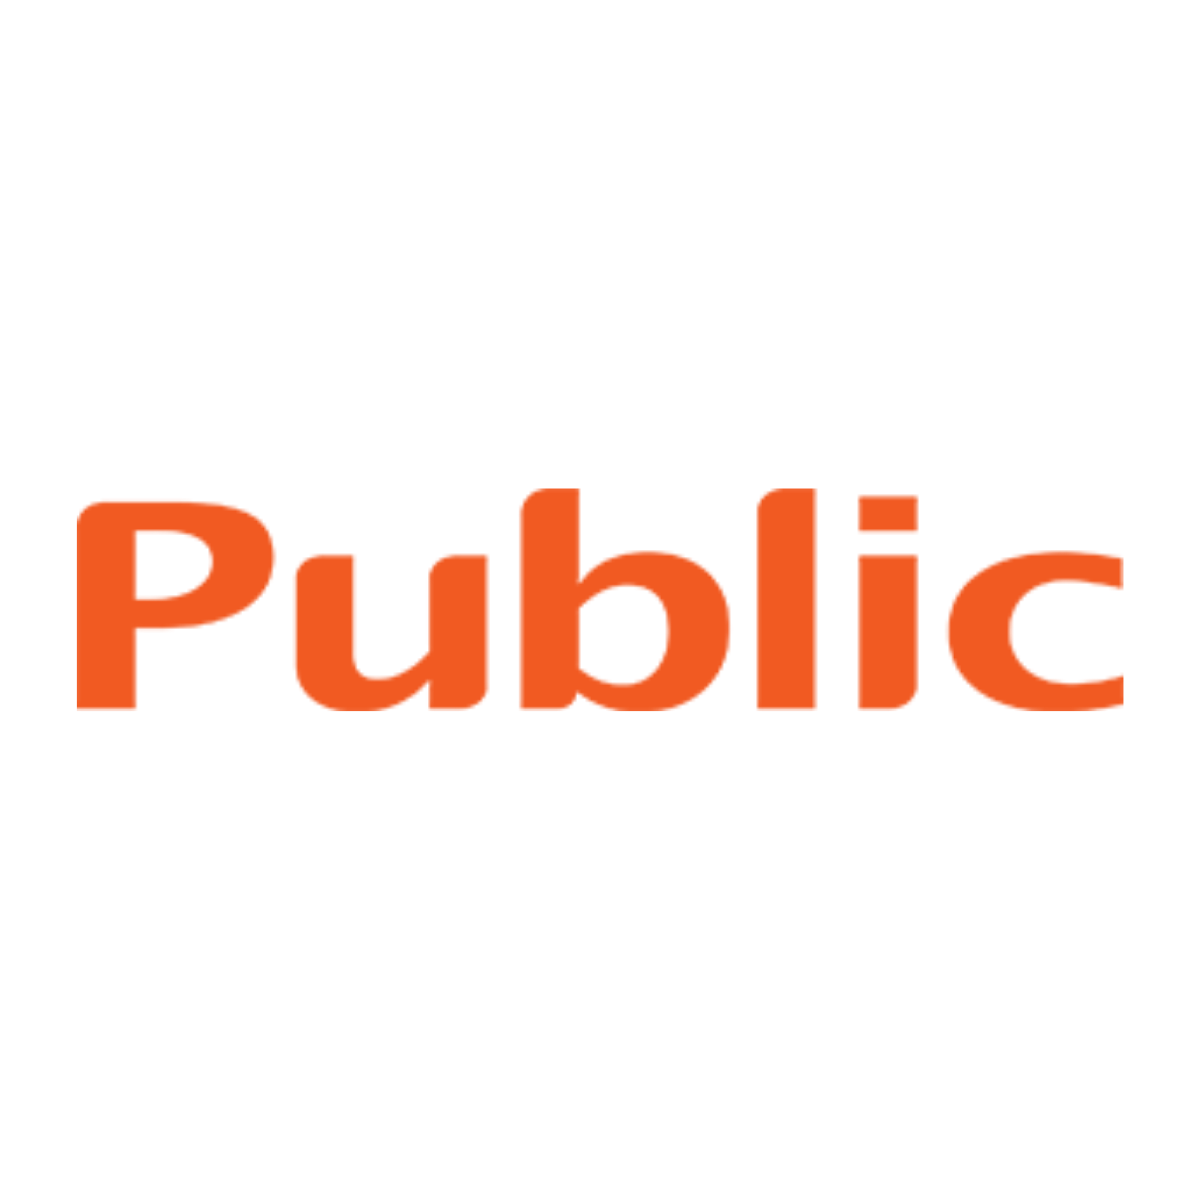 Паблик лого. Публика logo. Public logo. Love public лого. Public login